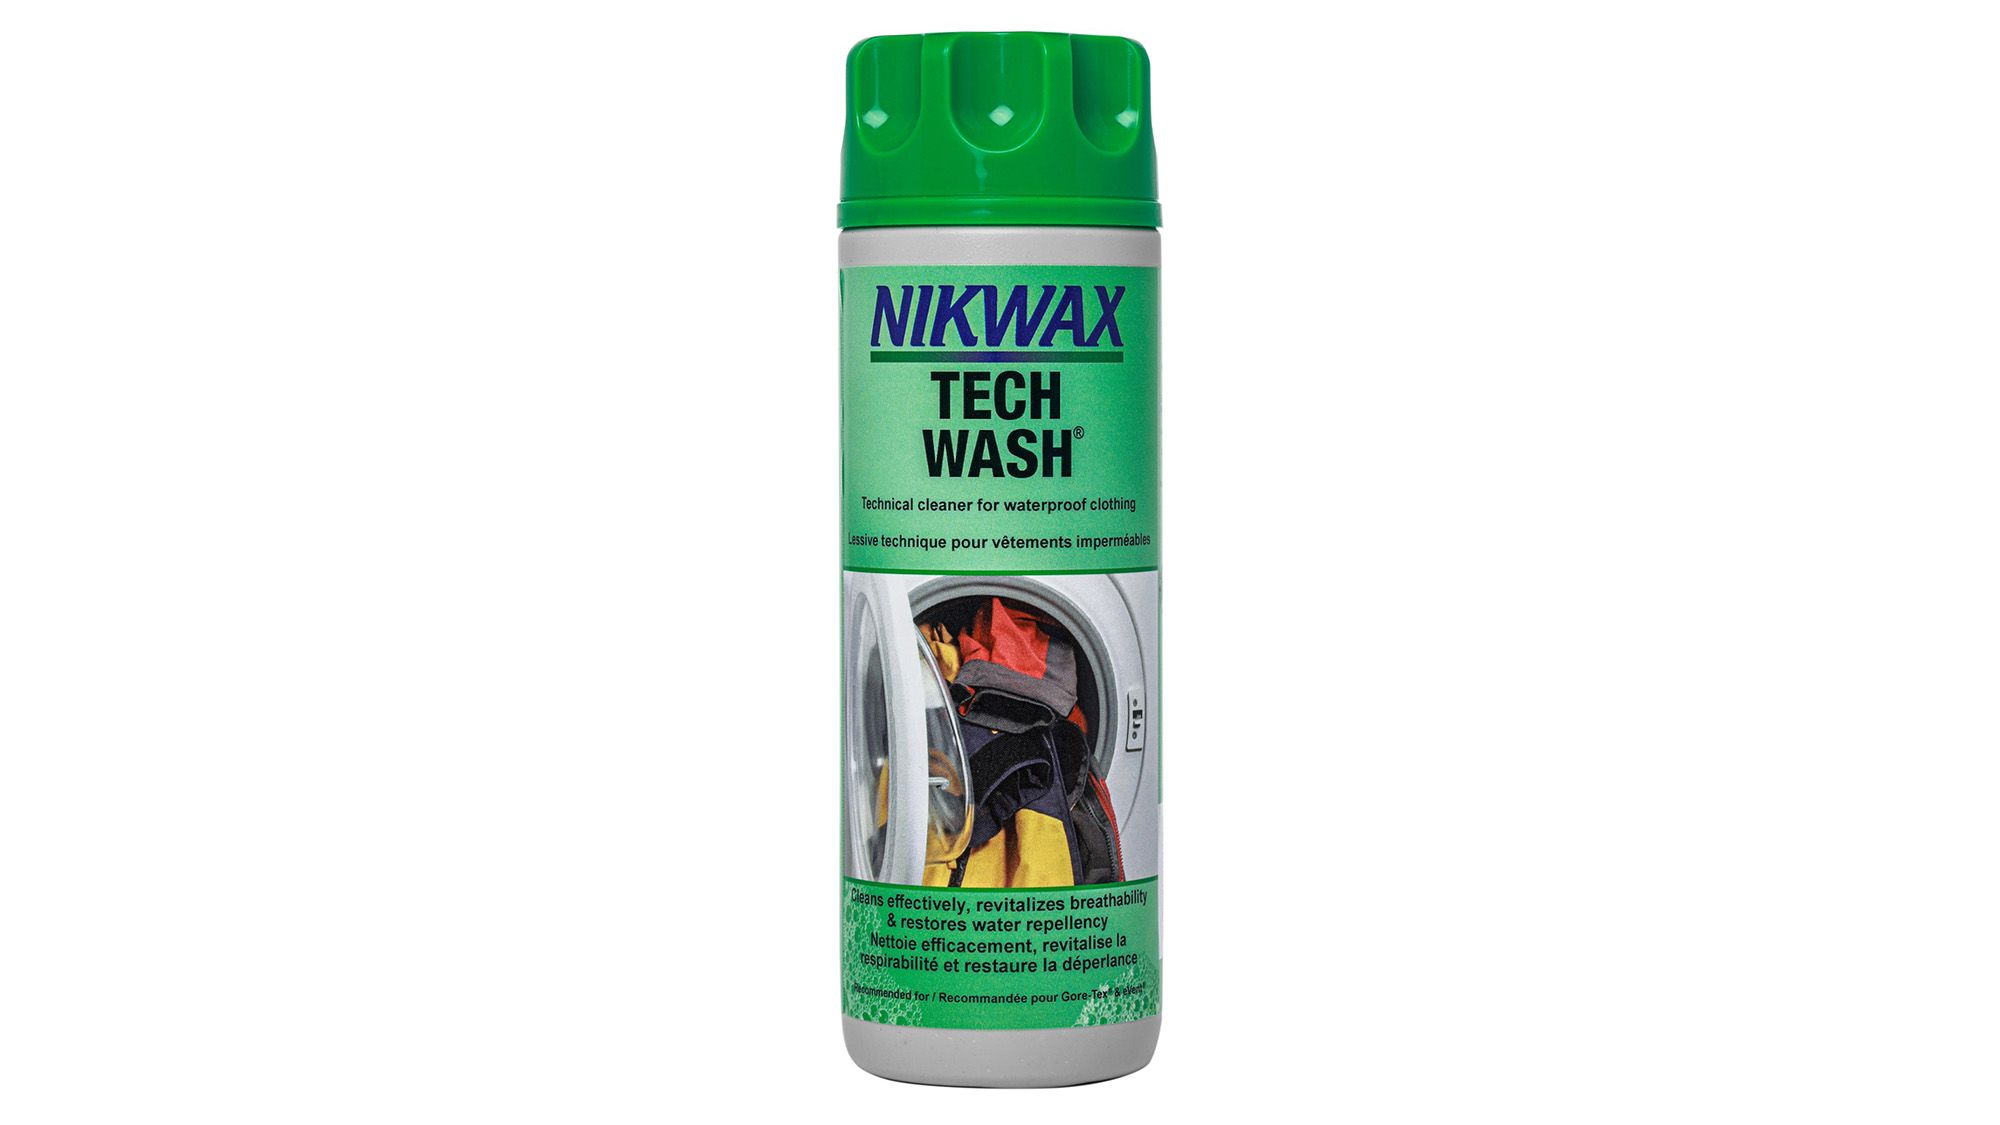 Nikwax Tech Wash and TX.Direct v household detergent - split waterproof  jacket test 